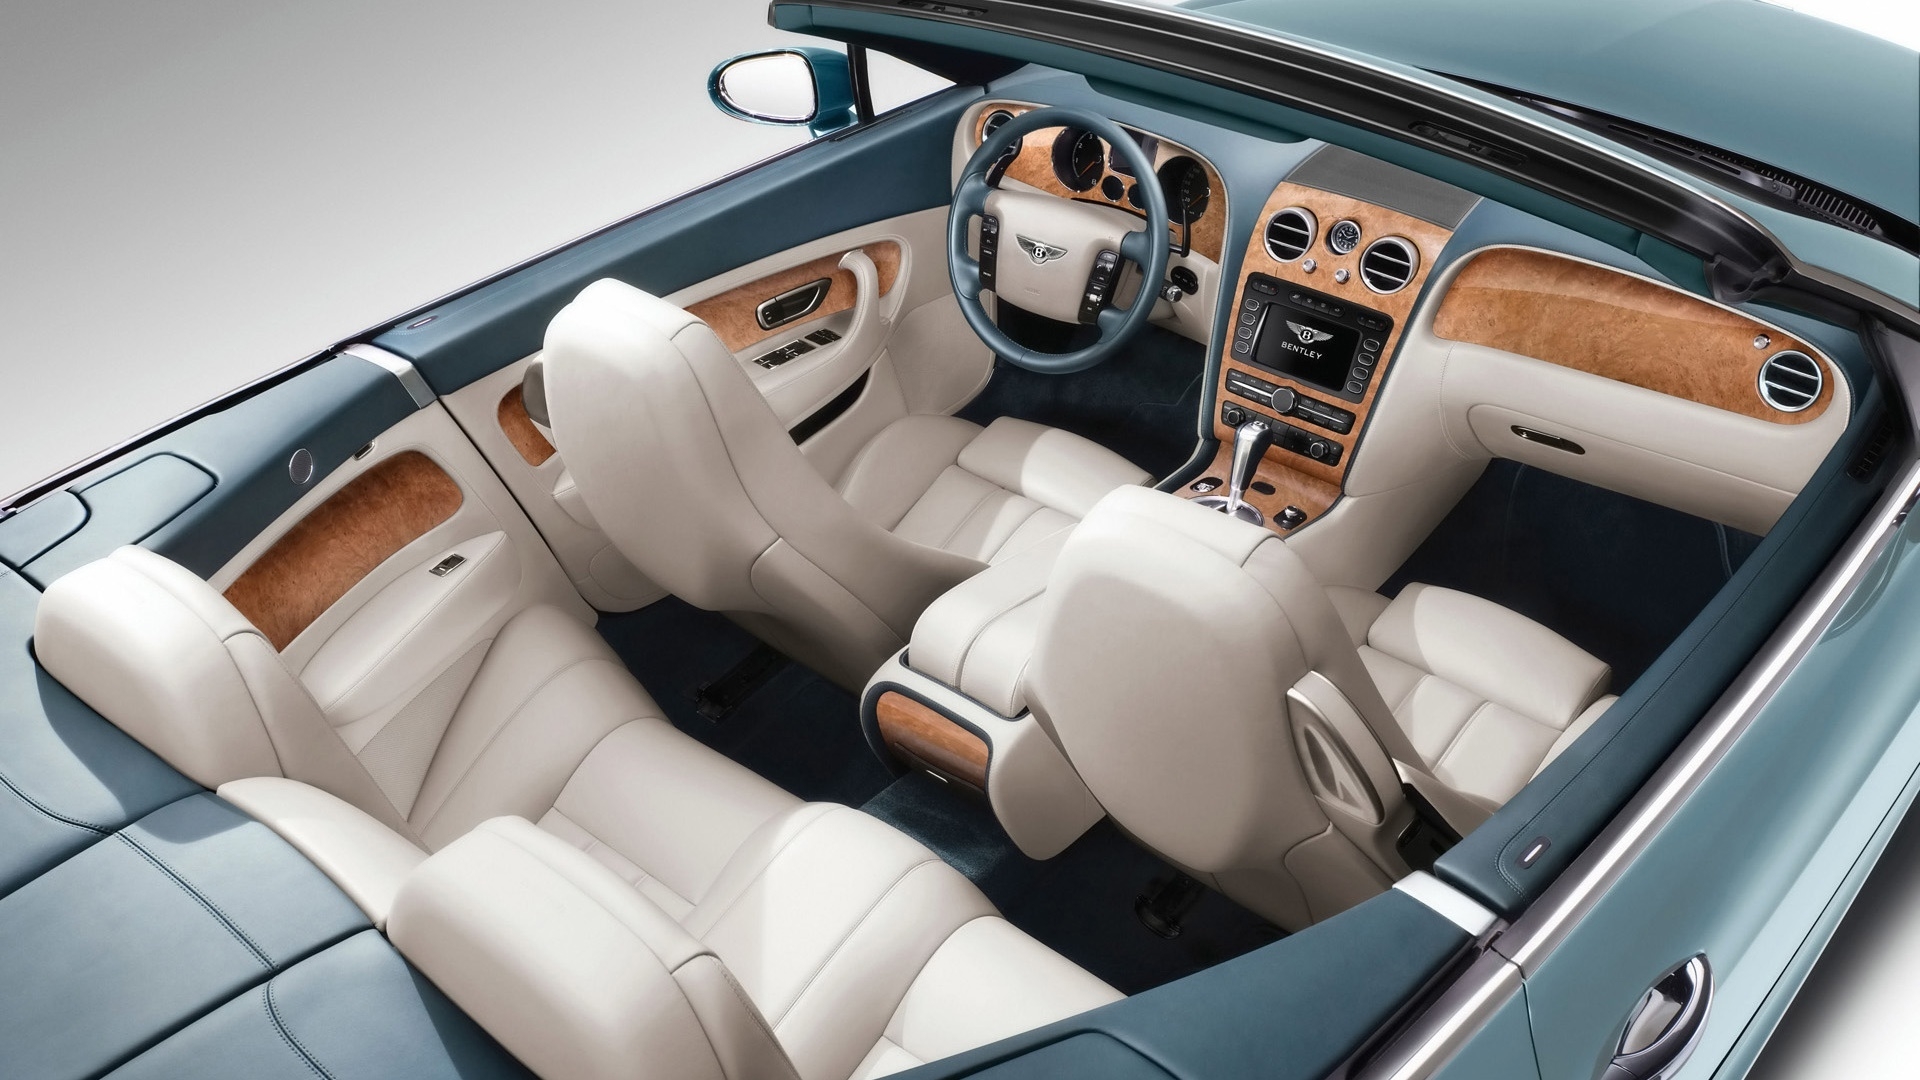 Bentley Continental GTC Interior 2009 for 1920 x 1080 HDTV 1080p resolution